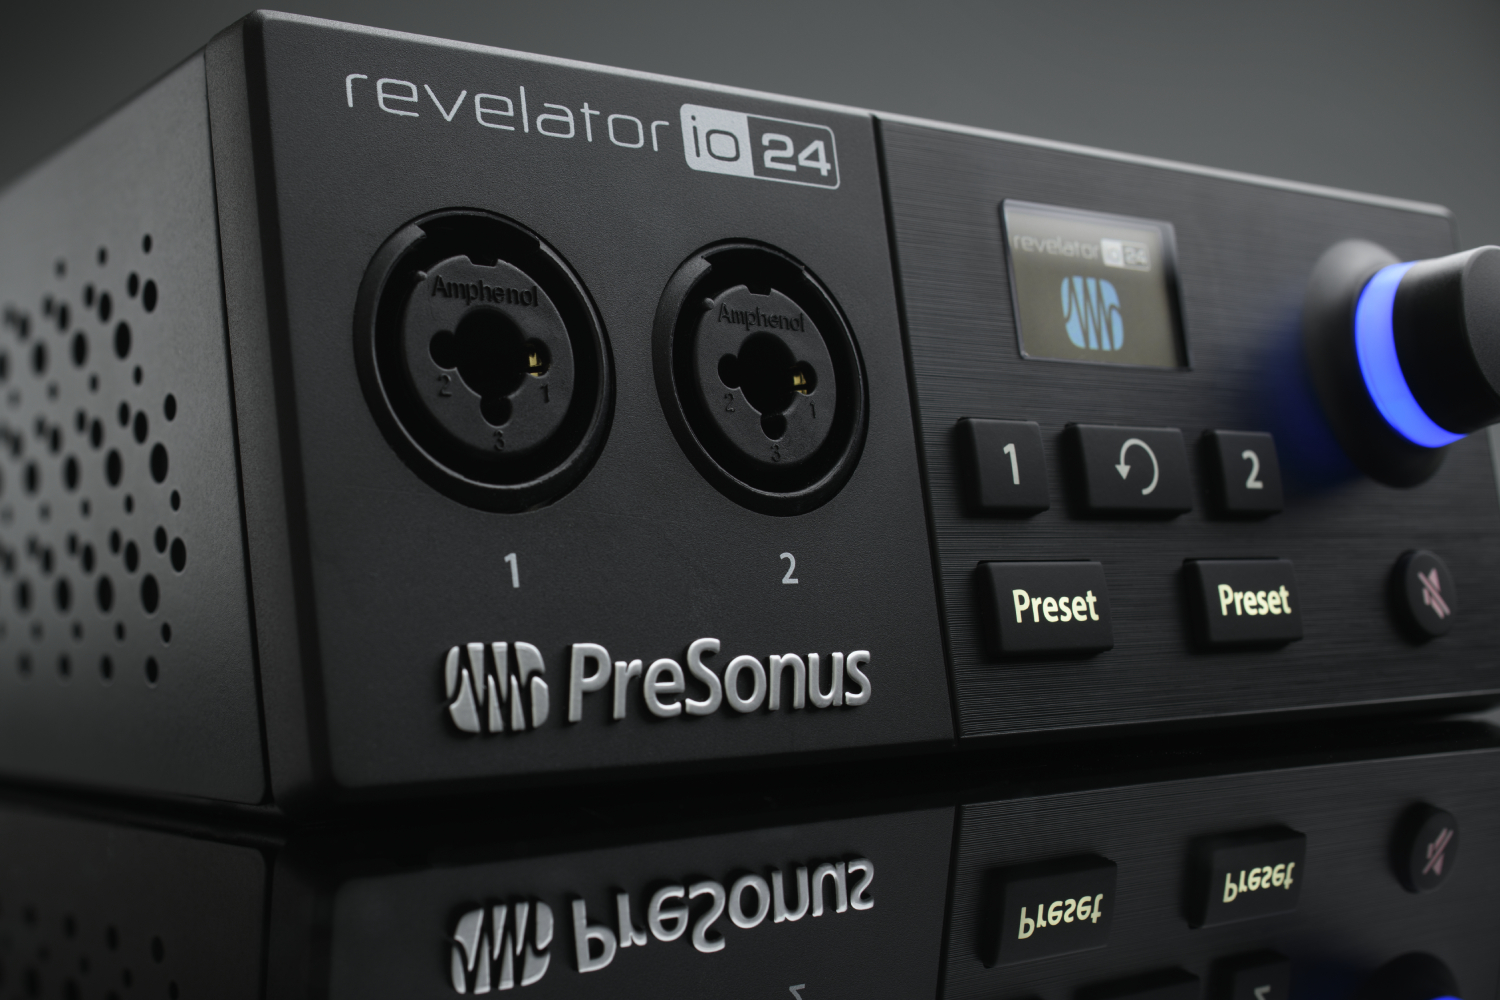 Presonus Revelator Io 24 - USB audio interface - Variation 5